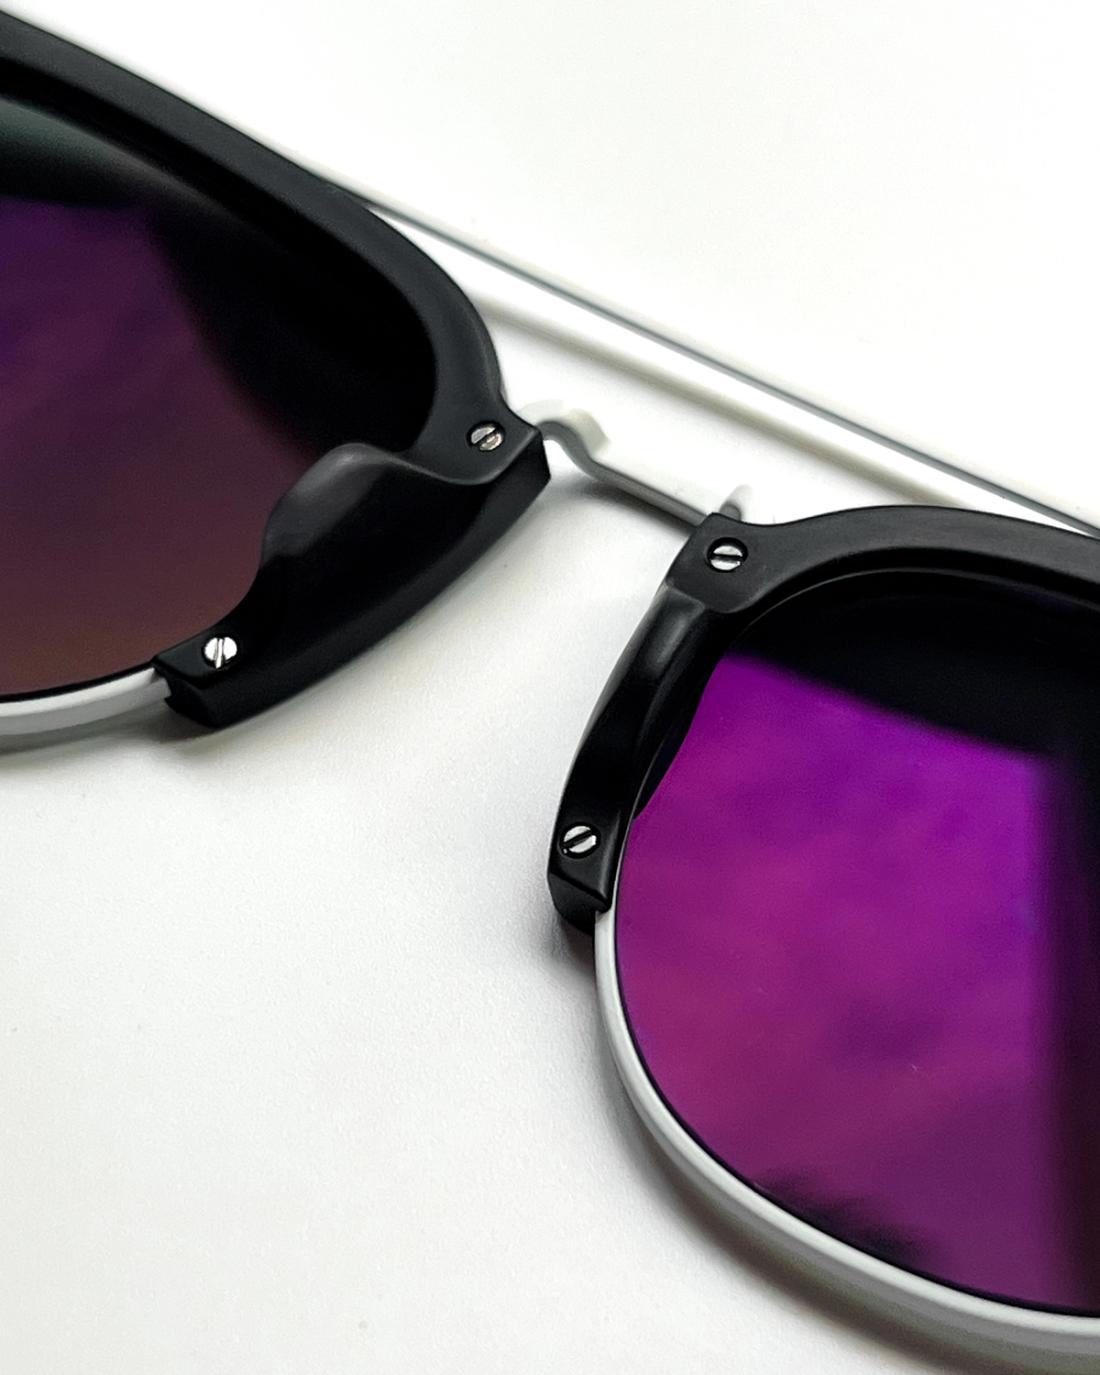 J90-Sunglasses